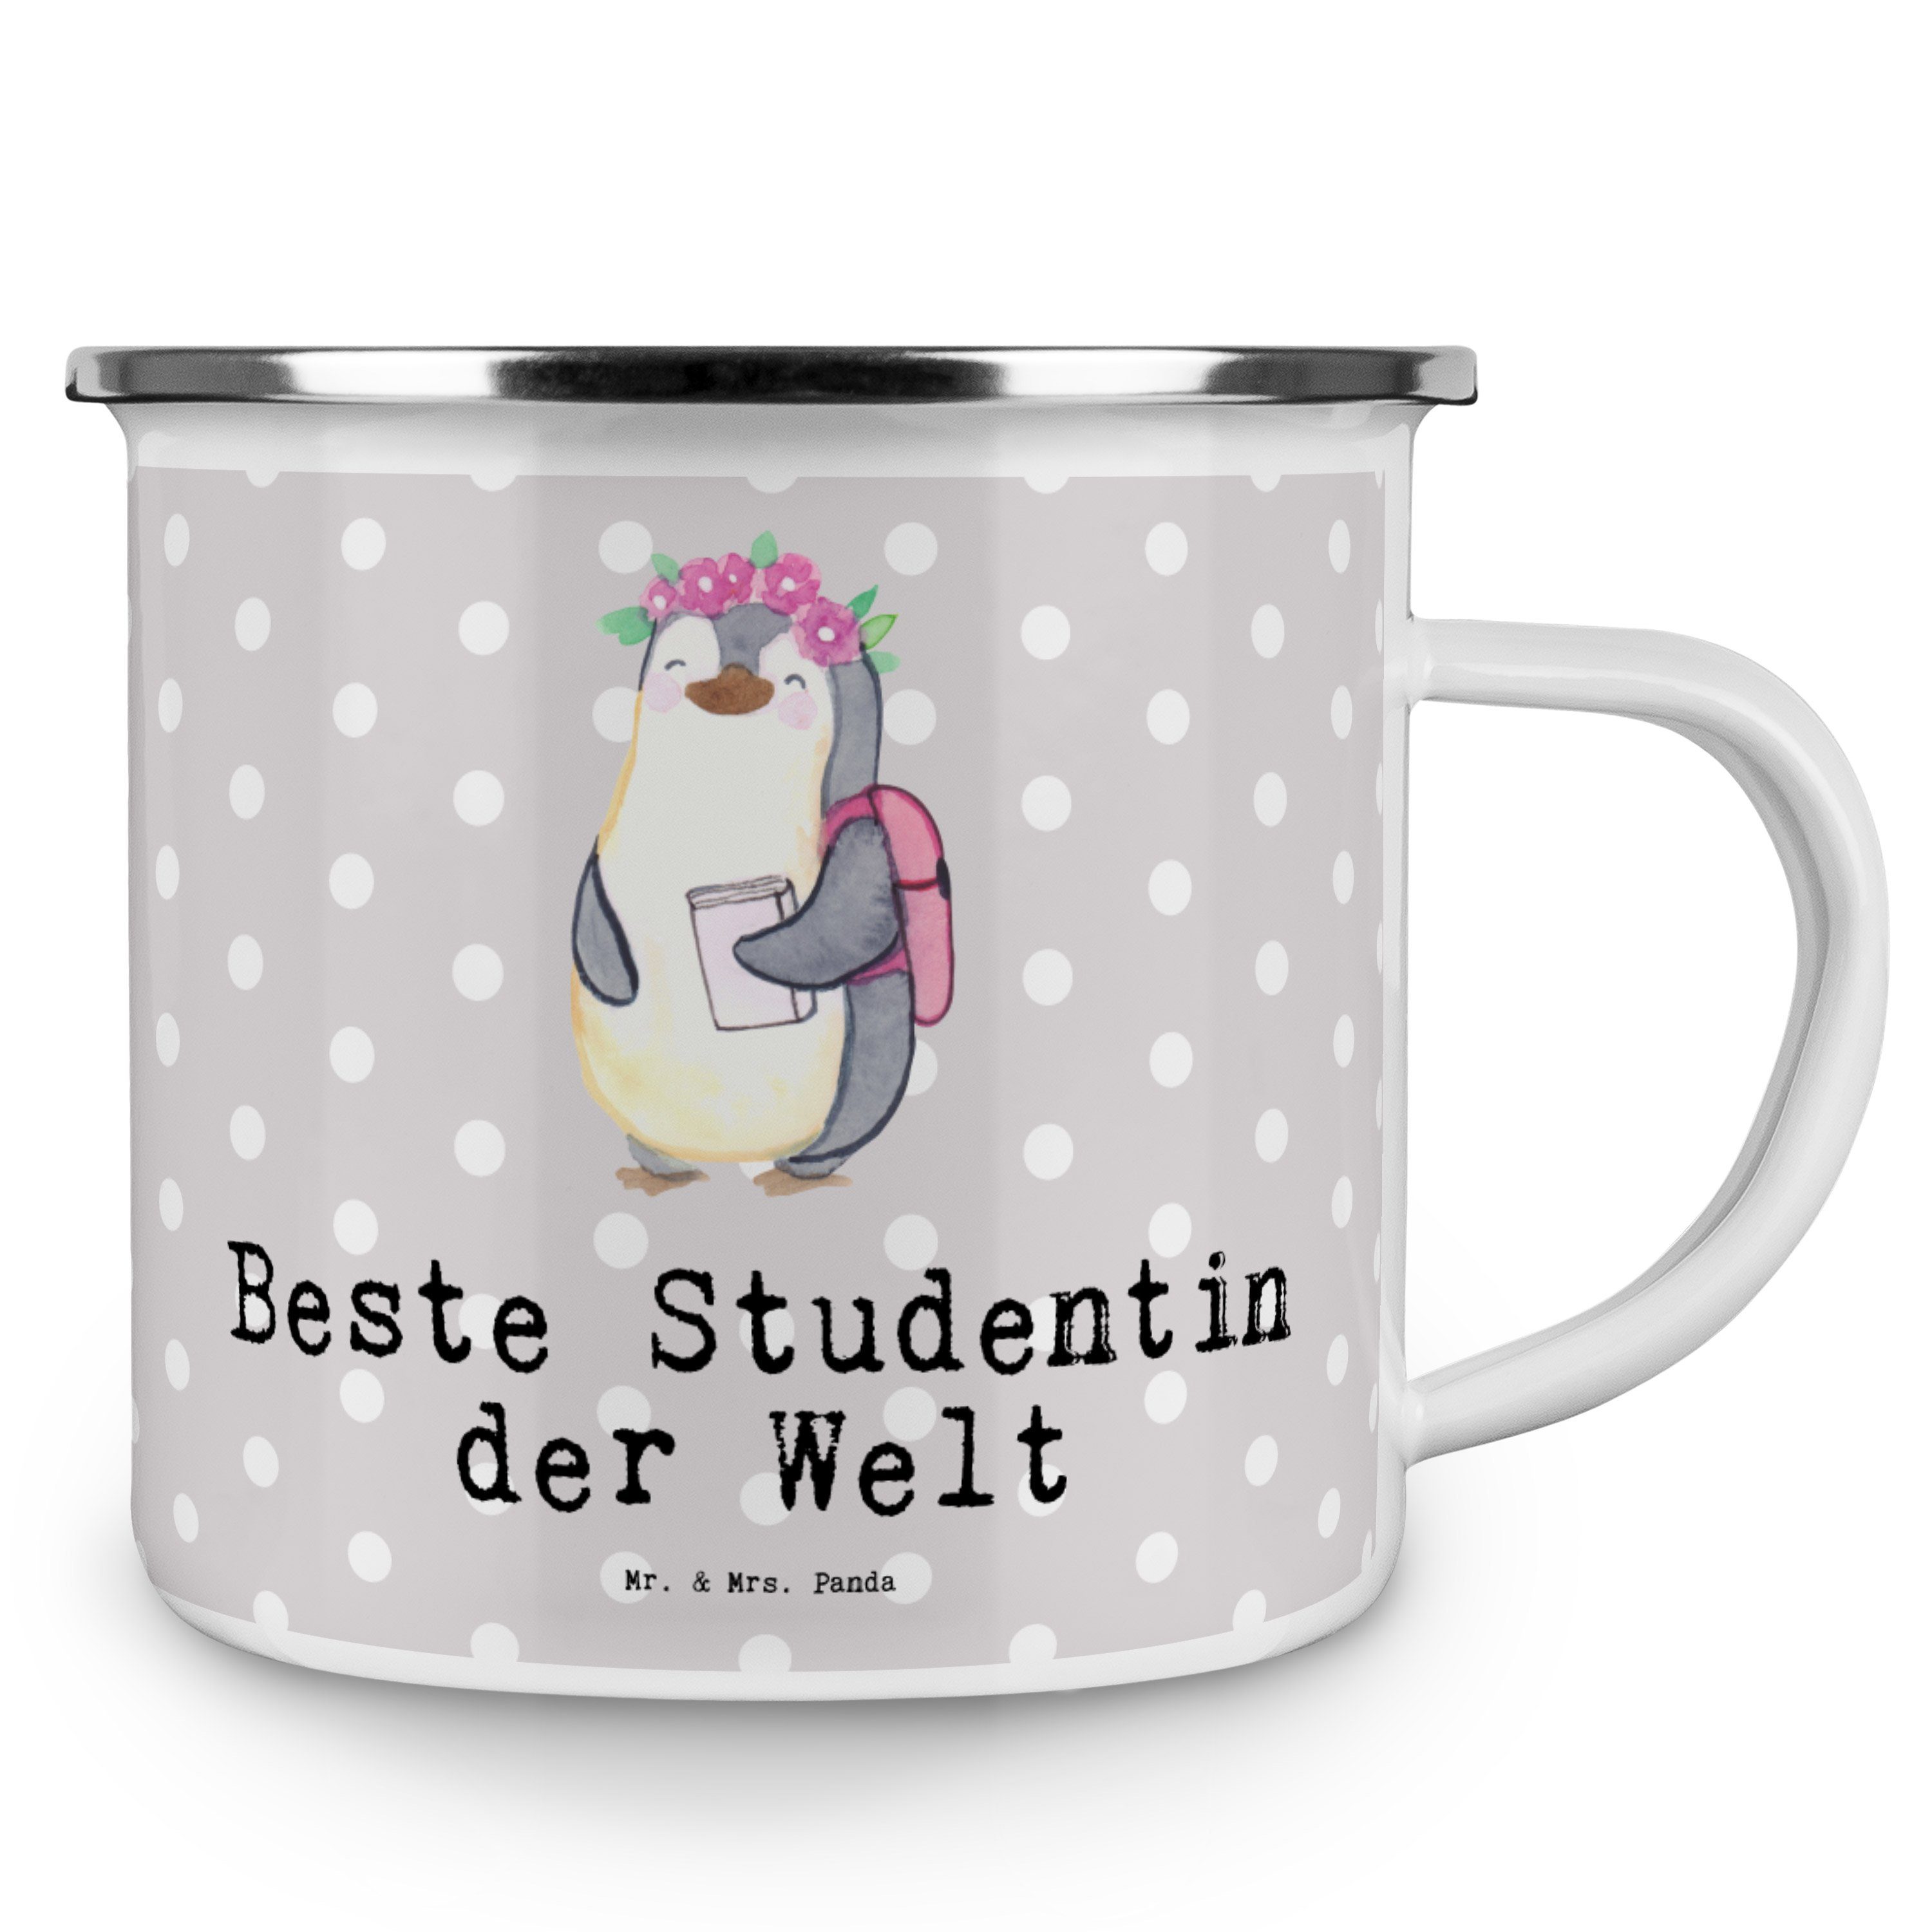 - Emaille Grau & Beste - Welt Studentin Pastell Campingta, Becher Mrs. Mr. Pinguin Geschenk, der Panda